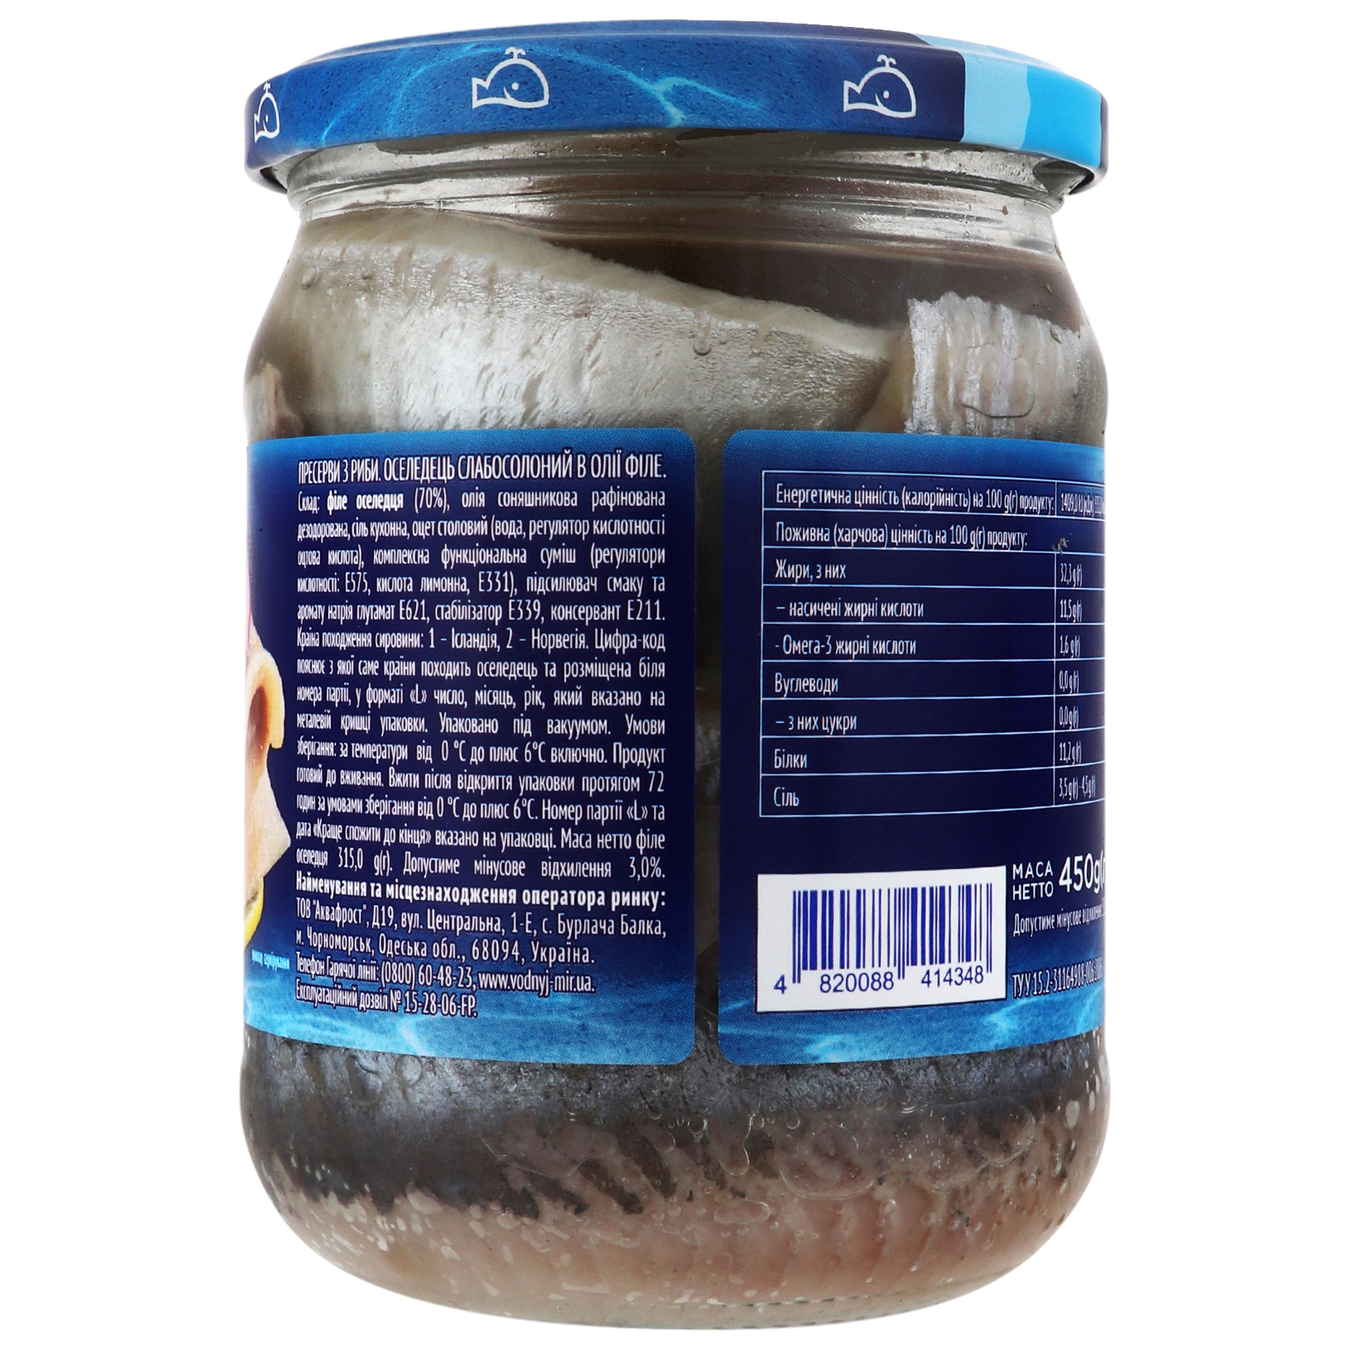 Water World herring slightly salted in oil fillet glass jar 450g 3